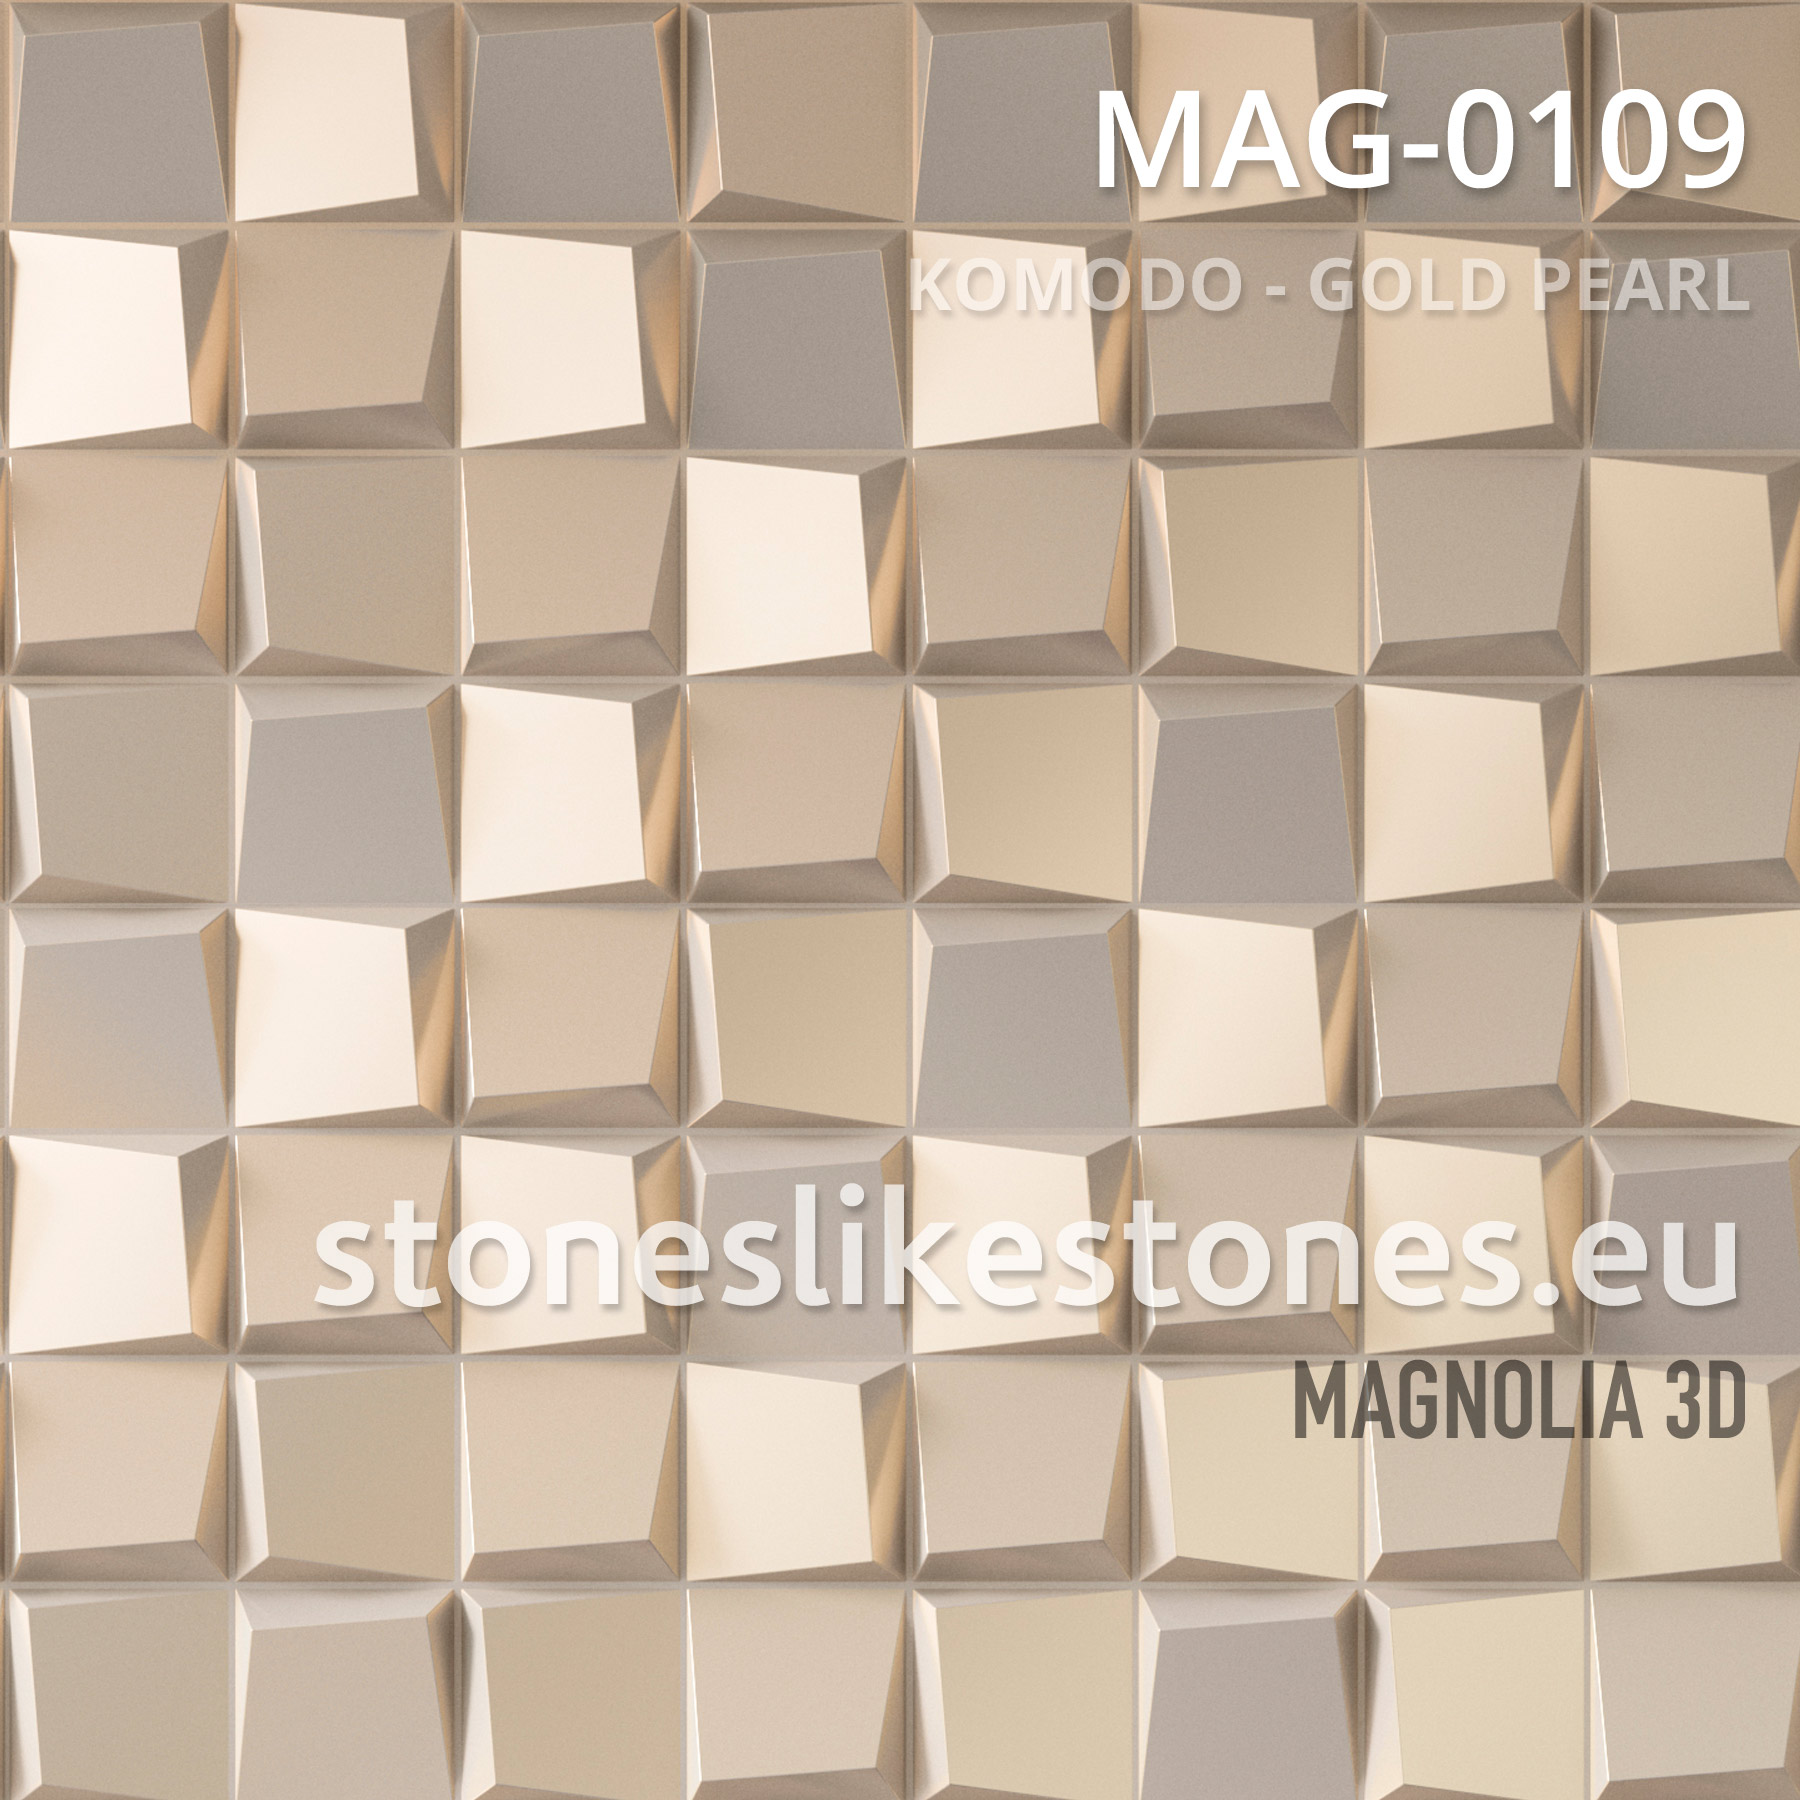 Magnolia 3D – MAG-0109 KOMODO – GOLD PEARL